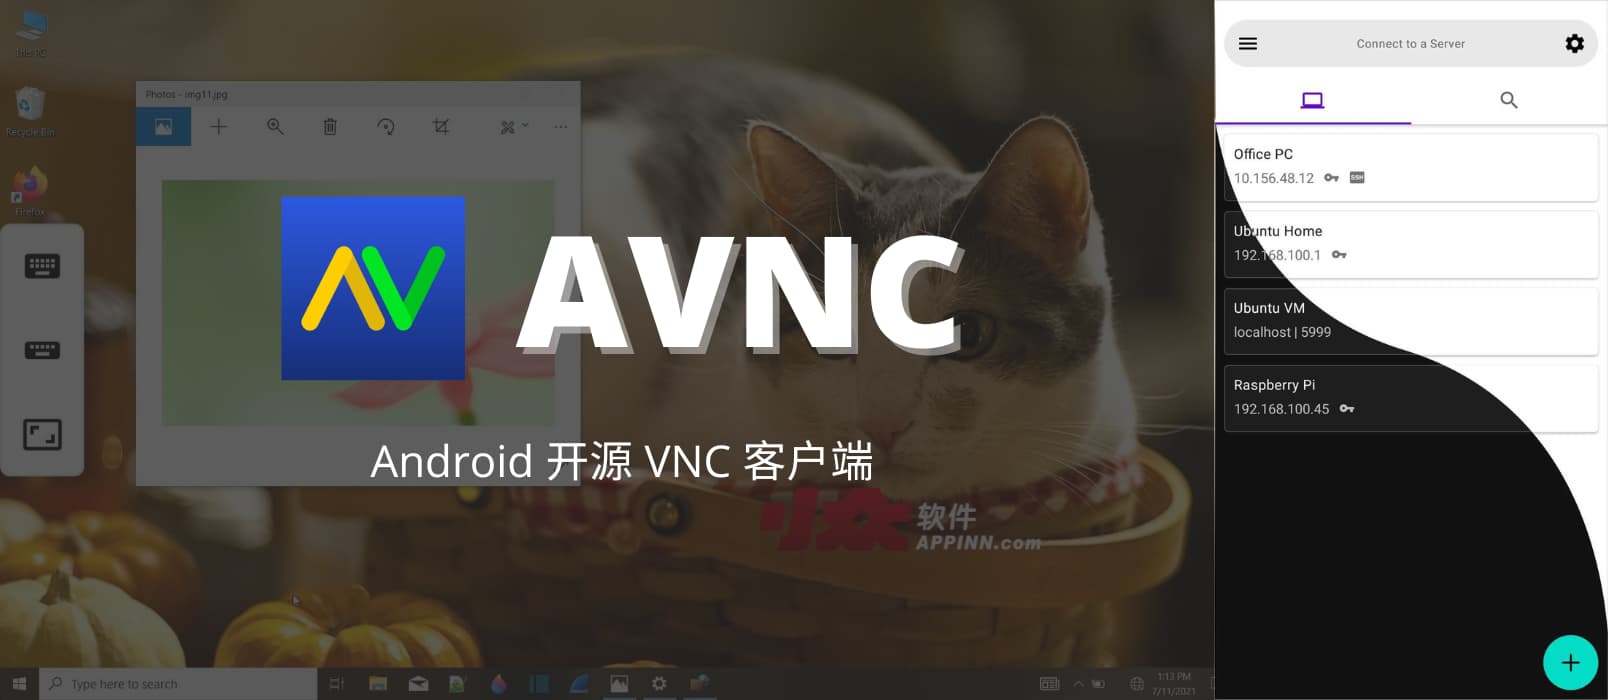 AVNC - Android 上的开源 VNC 客户端